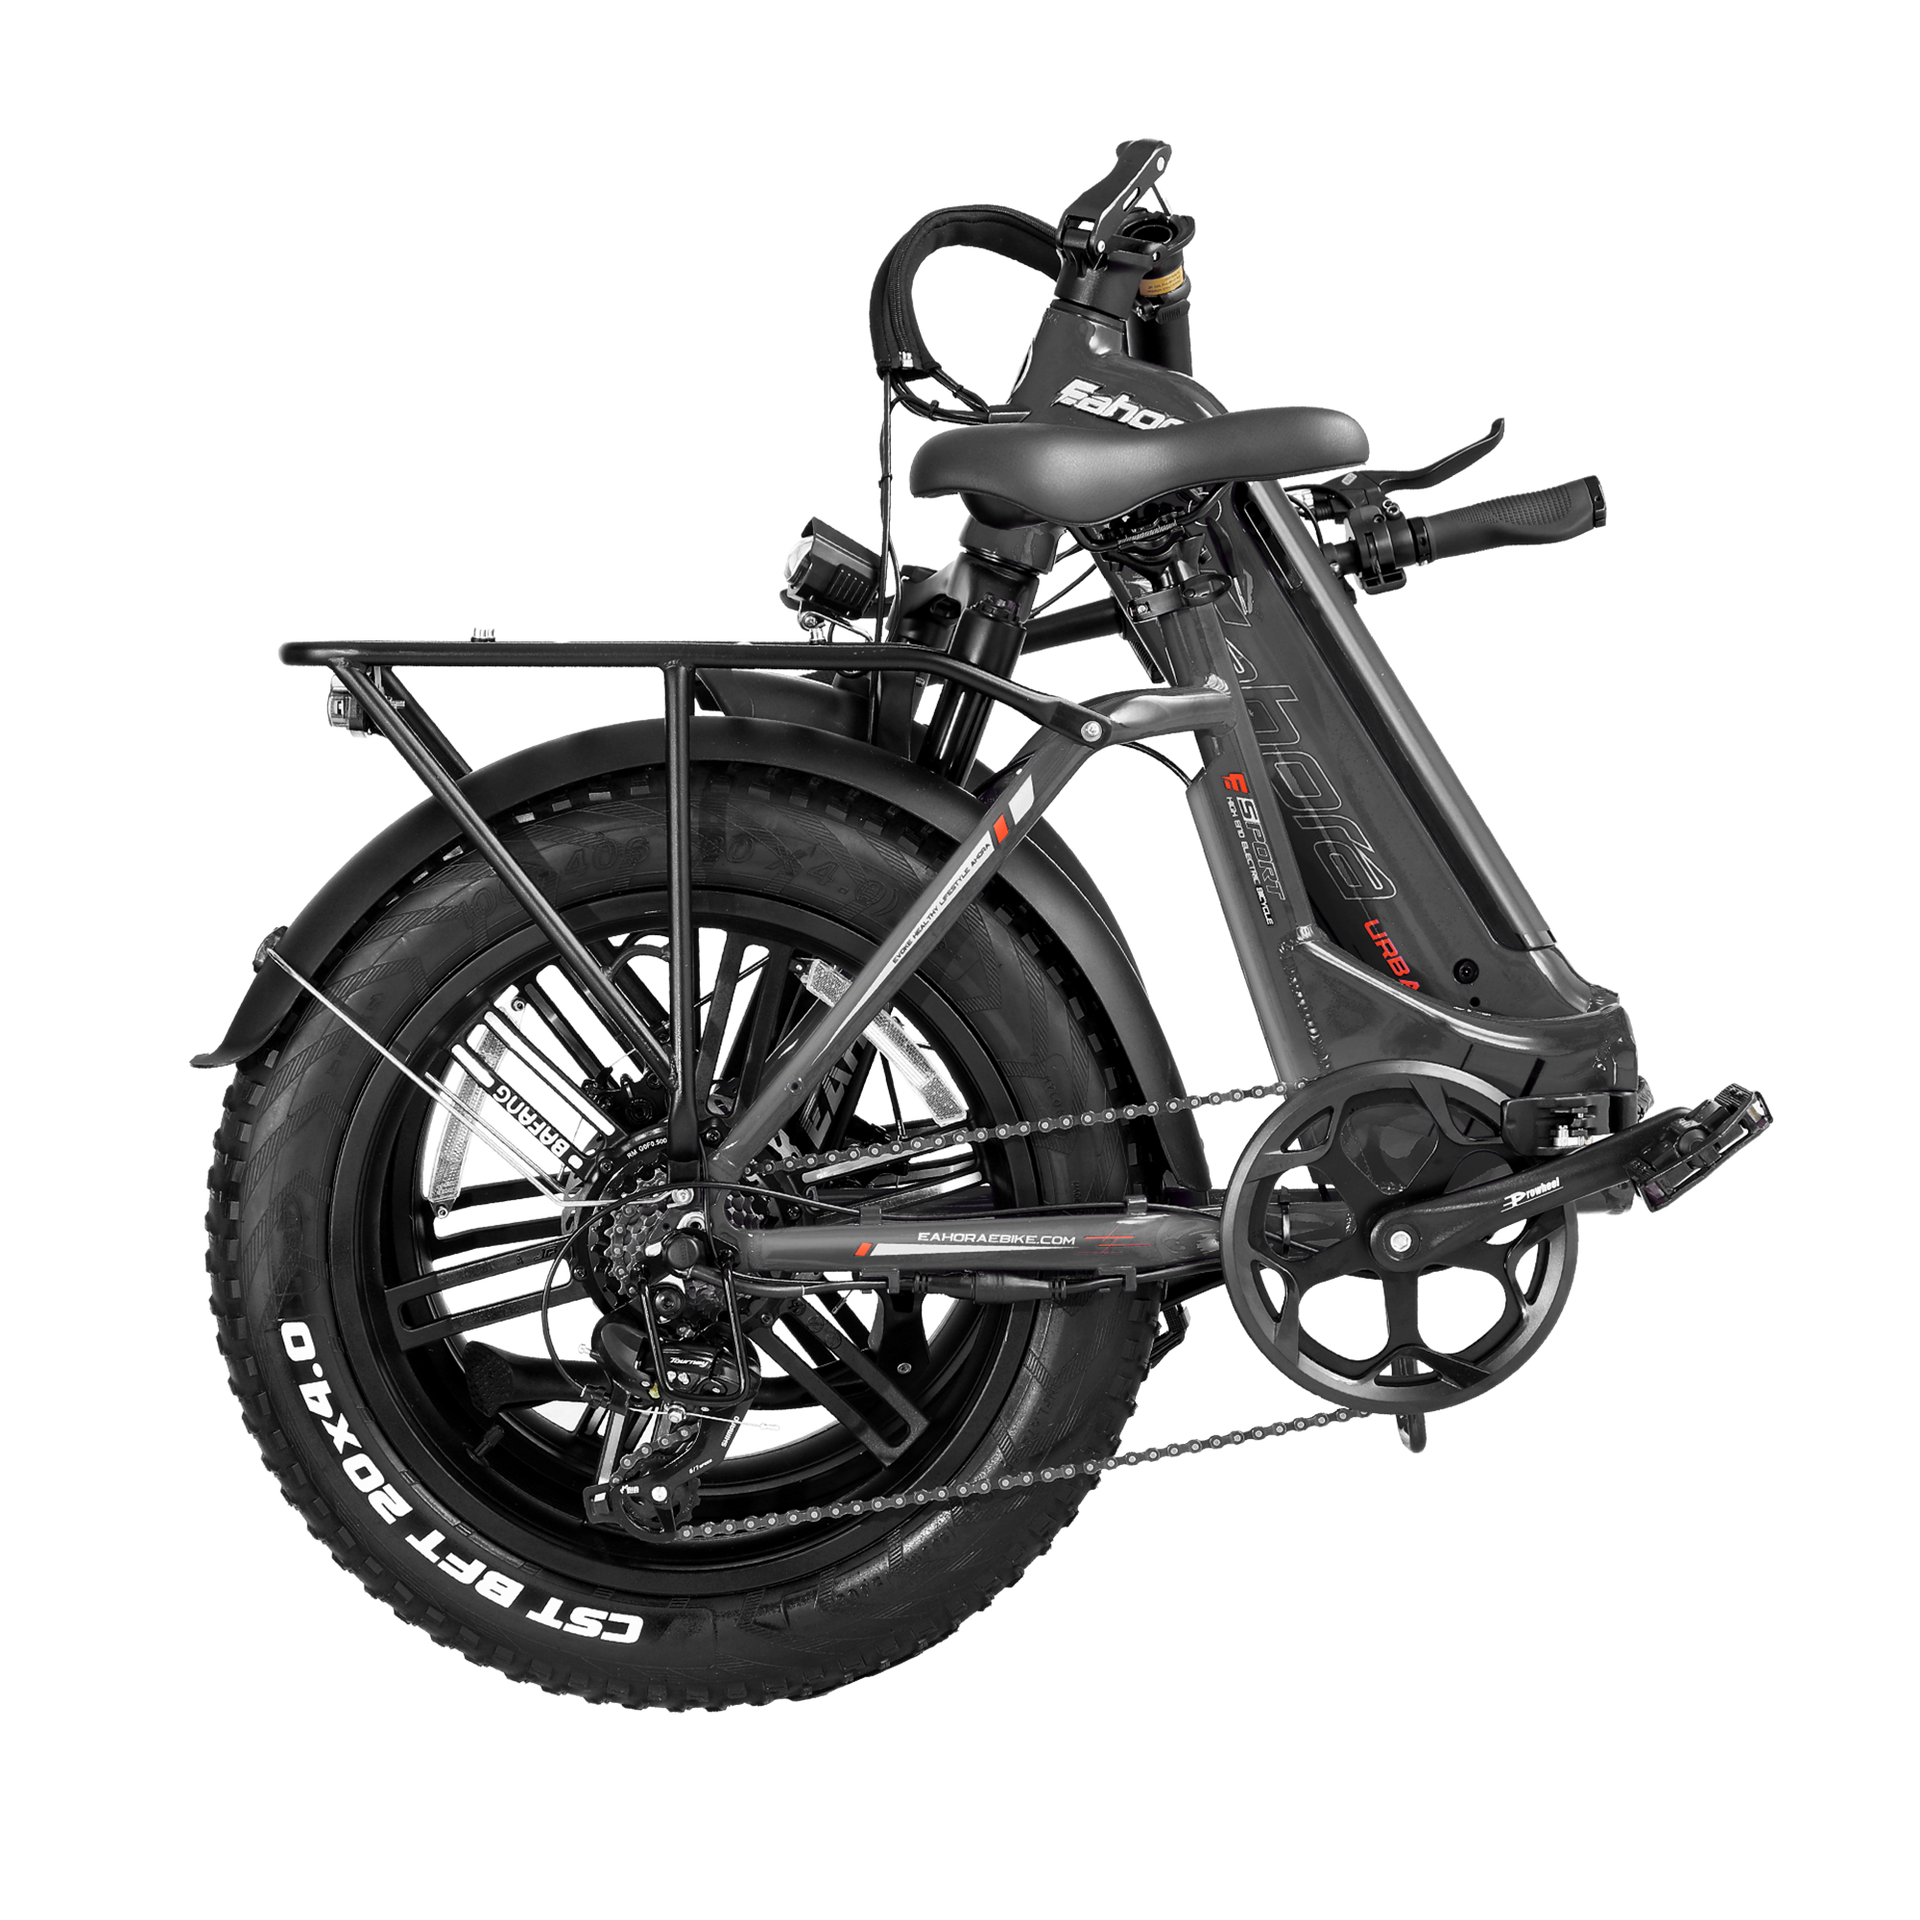 500W Folding Electric Bike | Step Thru Electric Bike | Eahora Urban (Black)